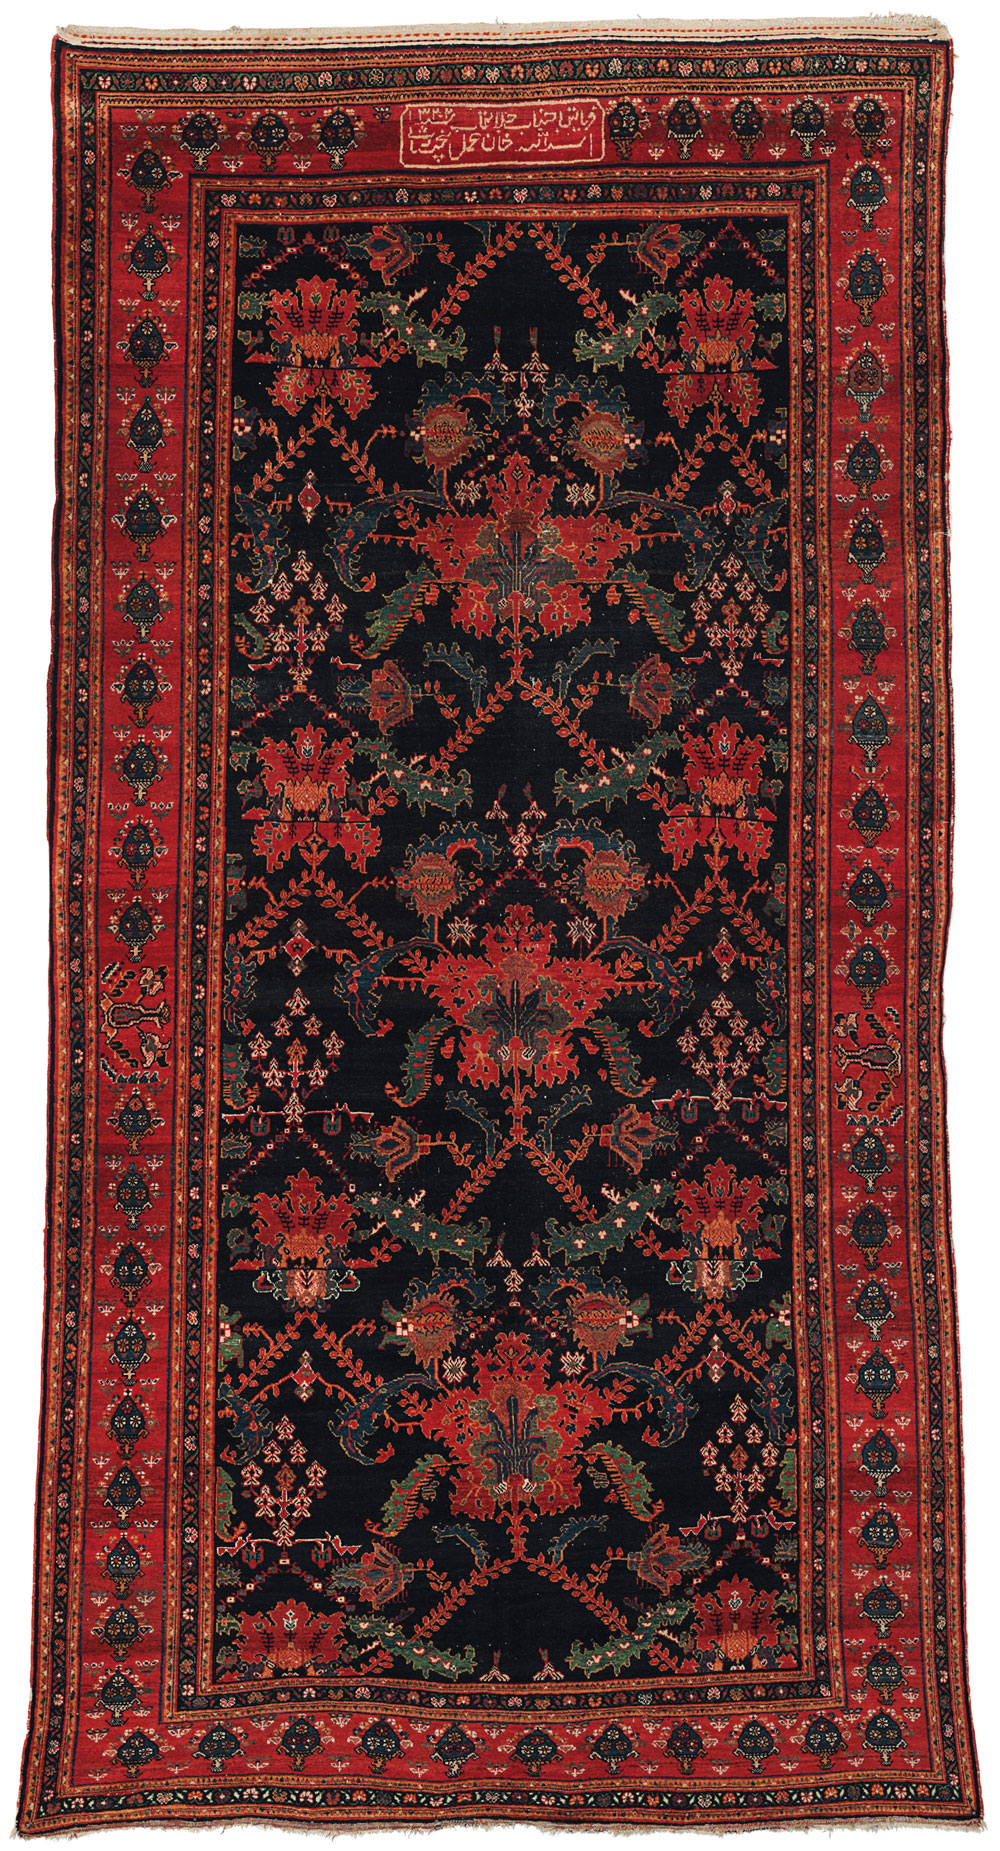 The Opulent Eye auction, Christie's New York 18 November, Bakhtiari carpet, west Persia, dated 1904-1905 AD/AH 1322, 409cm x 206cm (13'5" x 6'9"), estimate $8,000 - 12,000